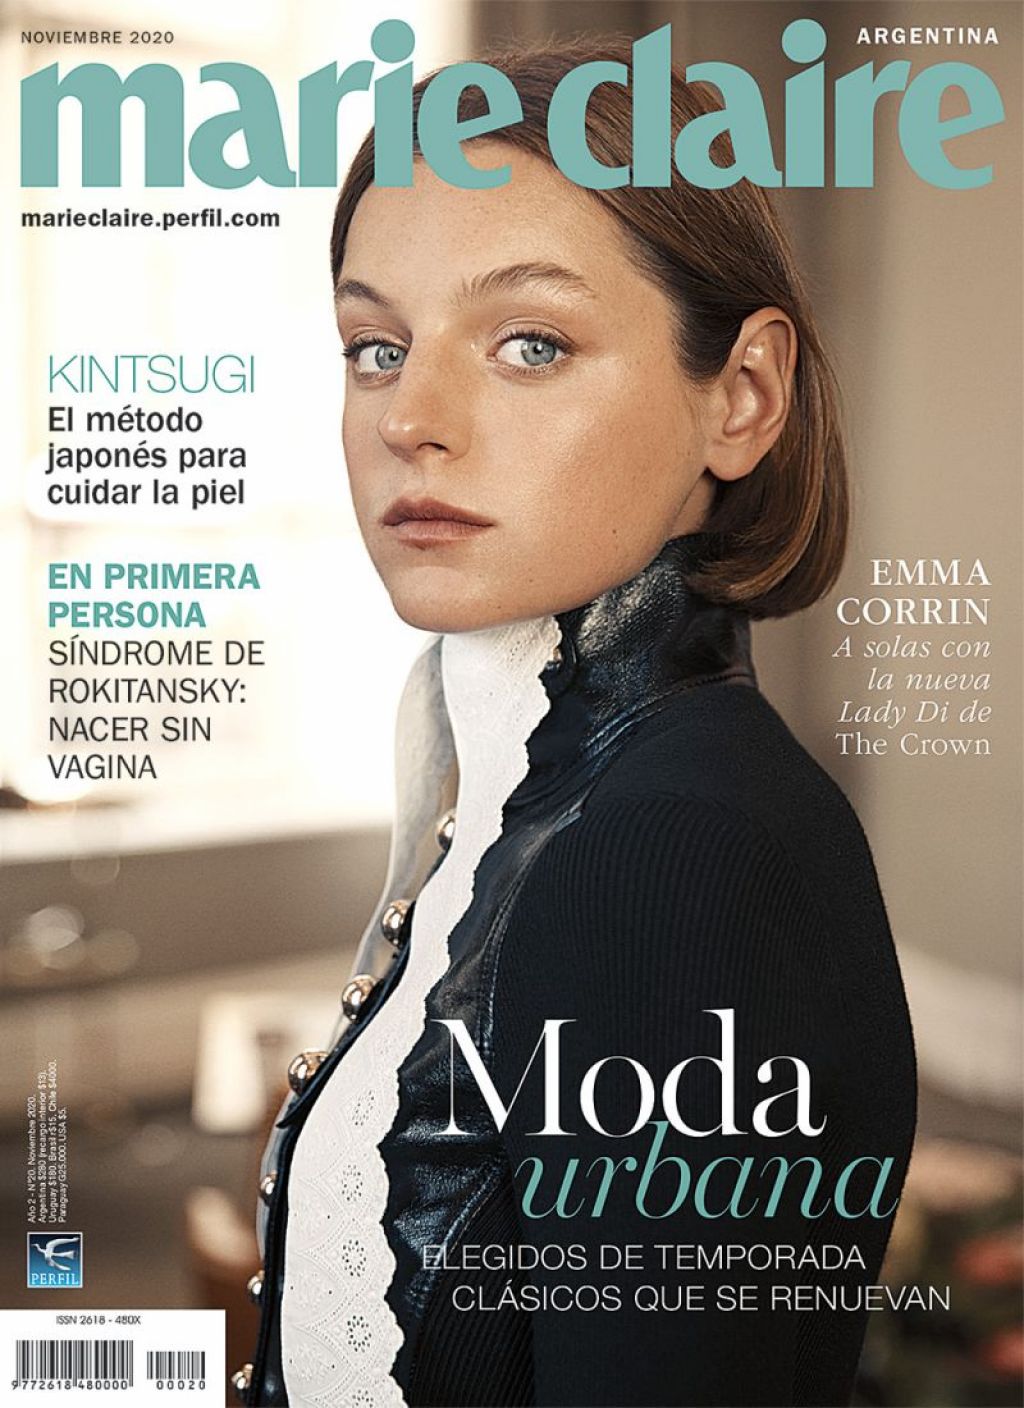 emma-corrin-marie-claire-argentina-november-2020-cover-0.jpg